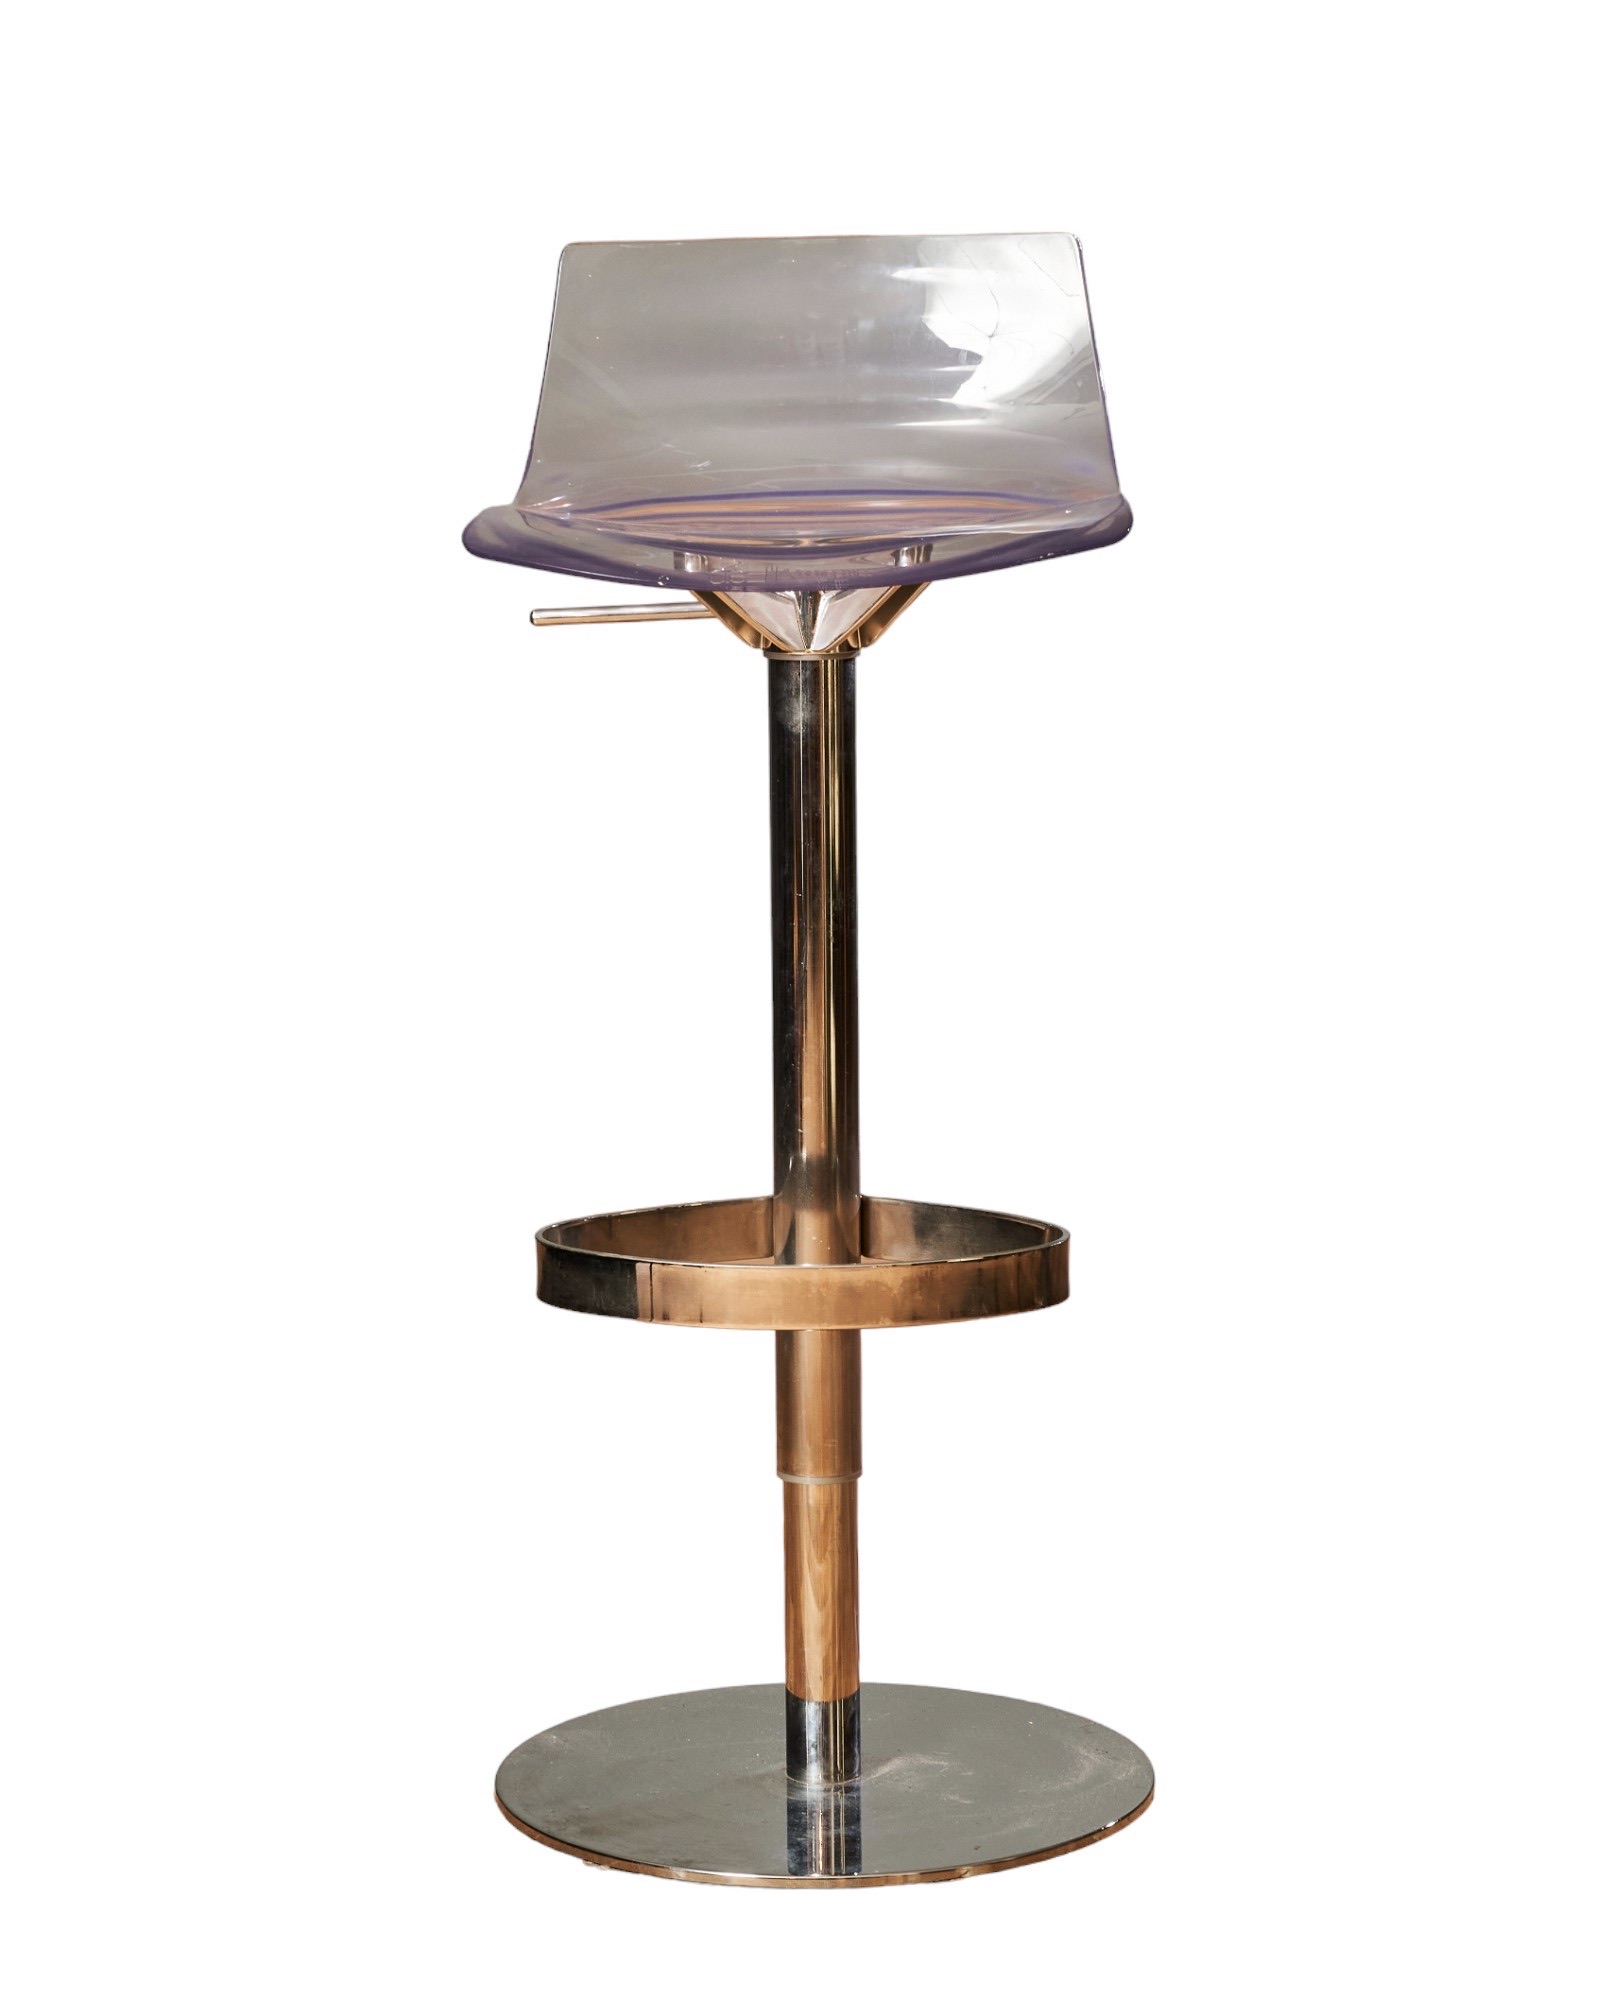 Calligaris, Four LíEau bar stools - Image 3 of 3